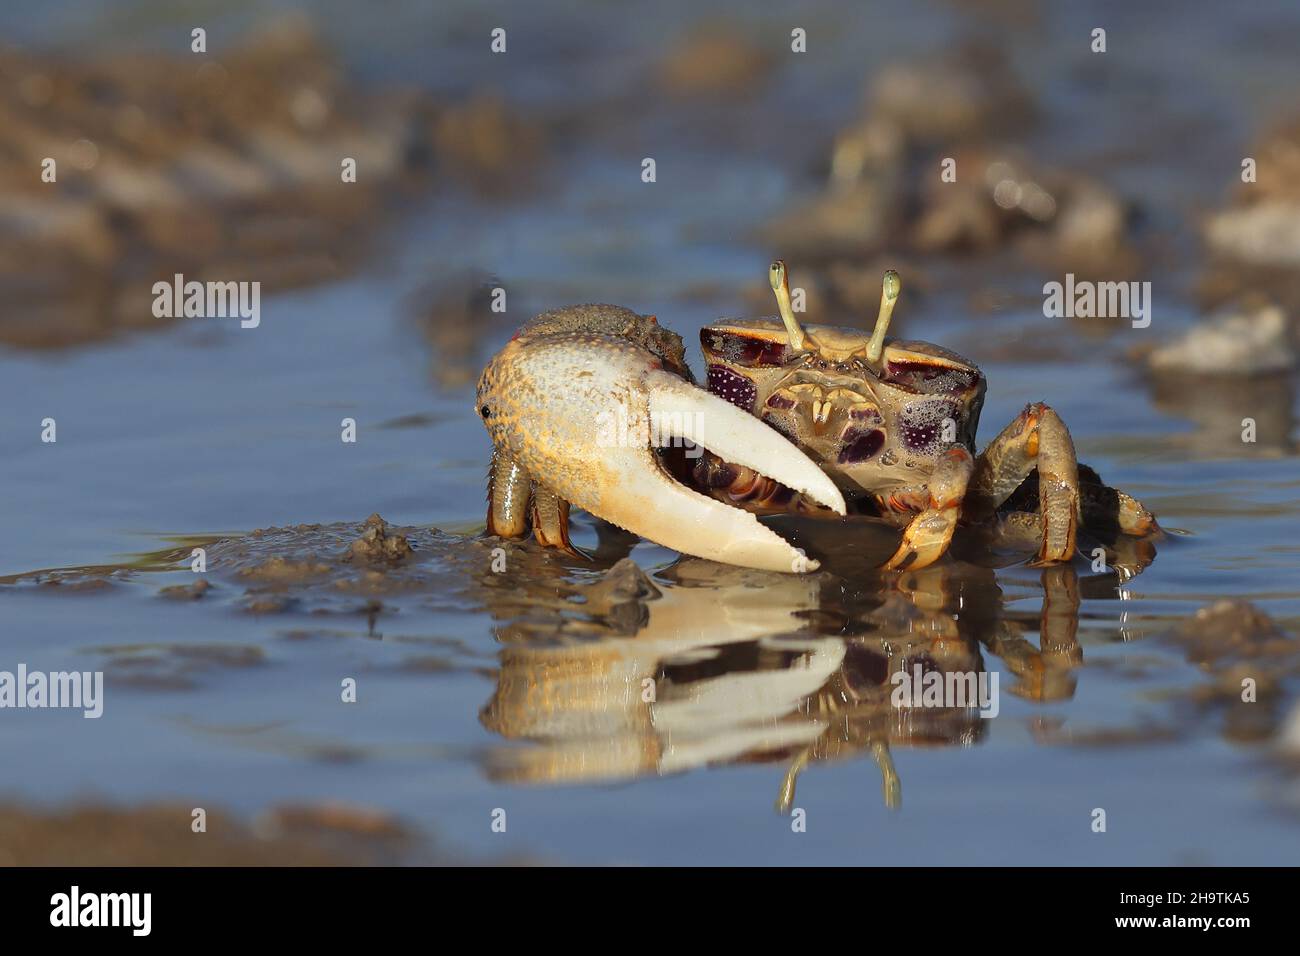 Moroccan fiddler crab, European Fiddler Crab (Uca tangeri), male walking in shallow water, front view, Spain, Andalusia, Sanlucar de Barrameda Stock Photo